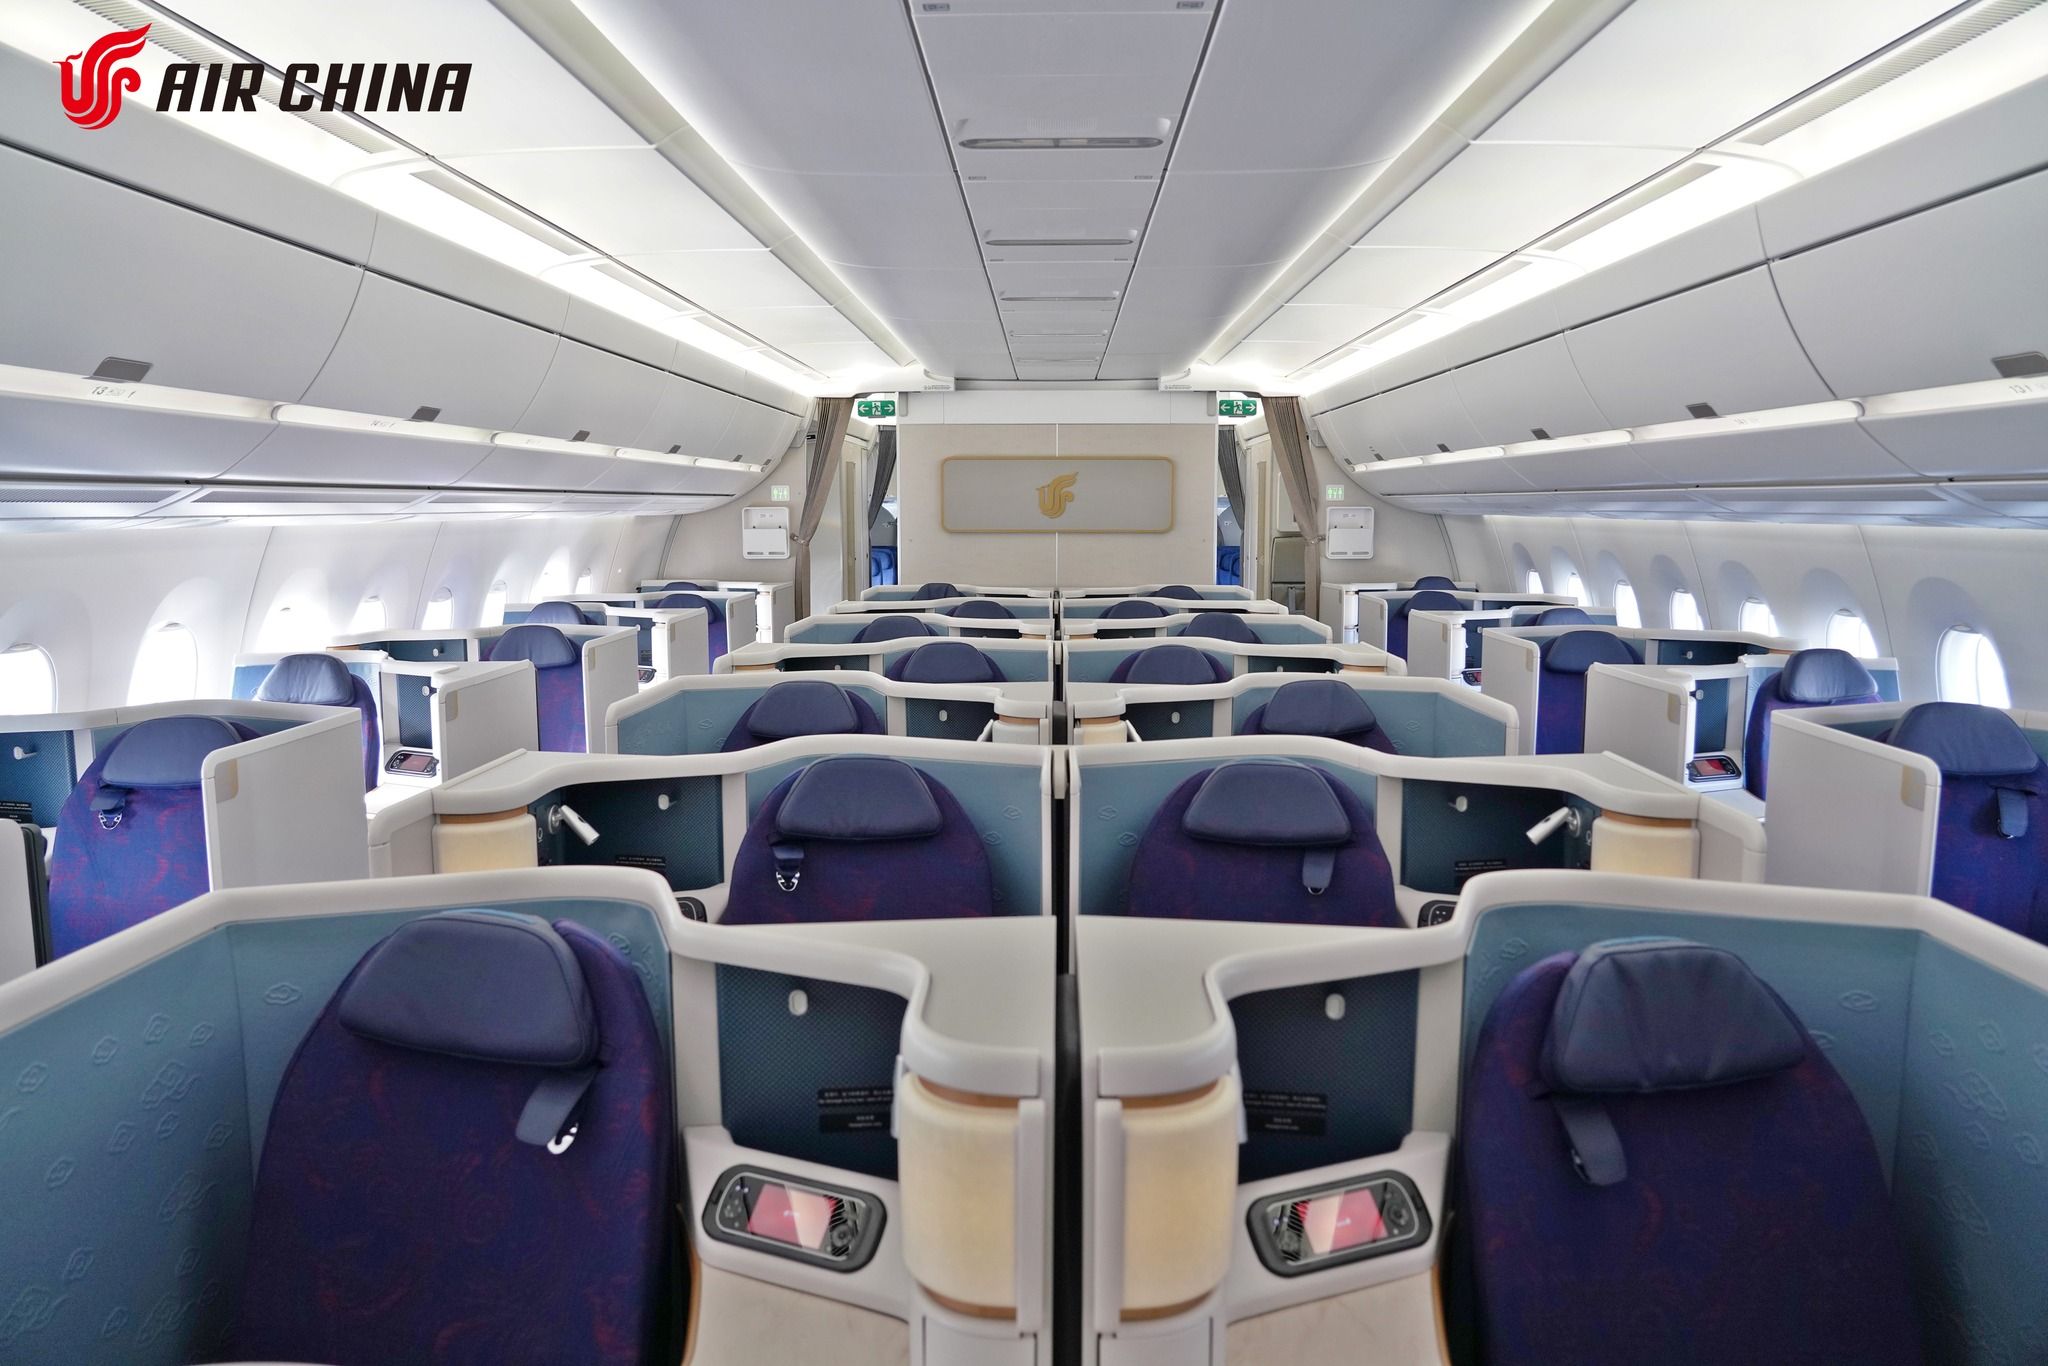 Air China's new A350 cabin